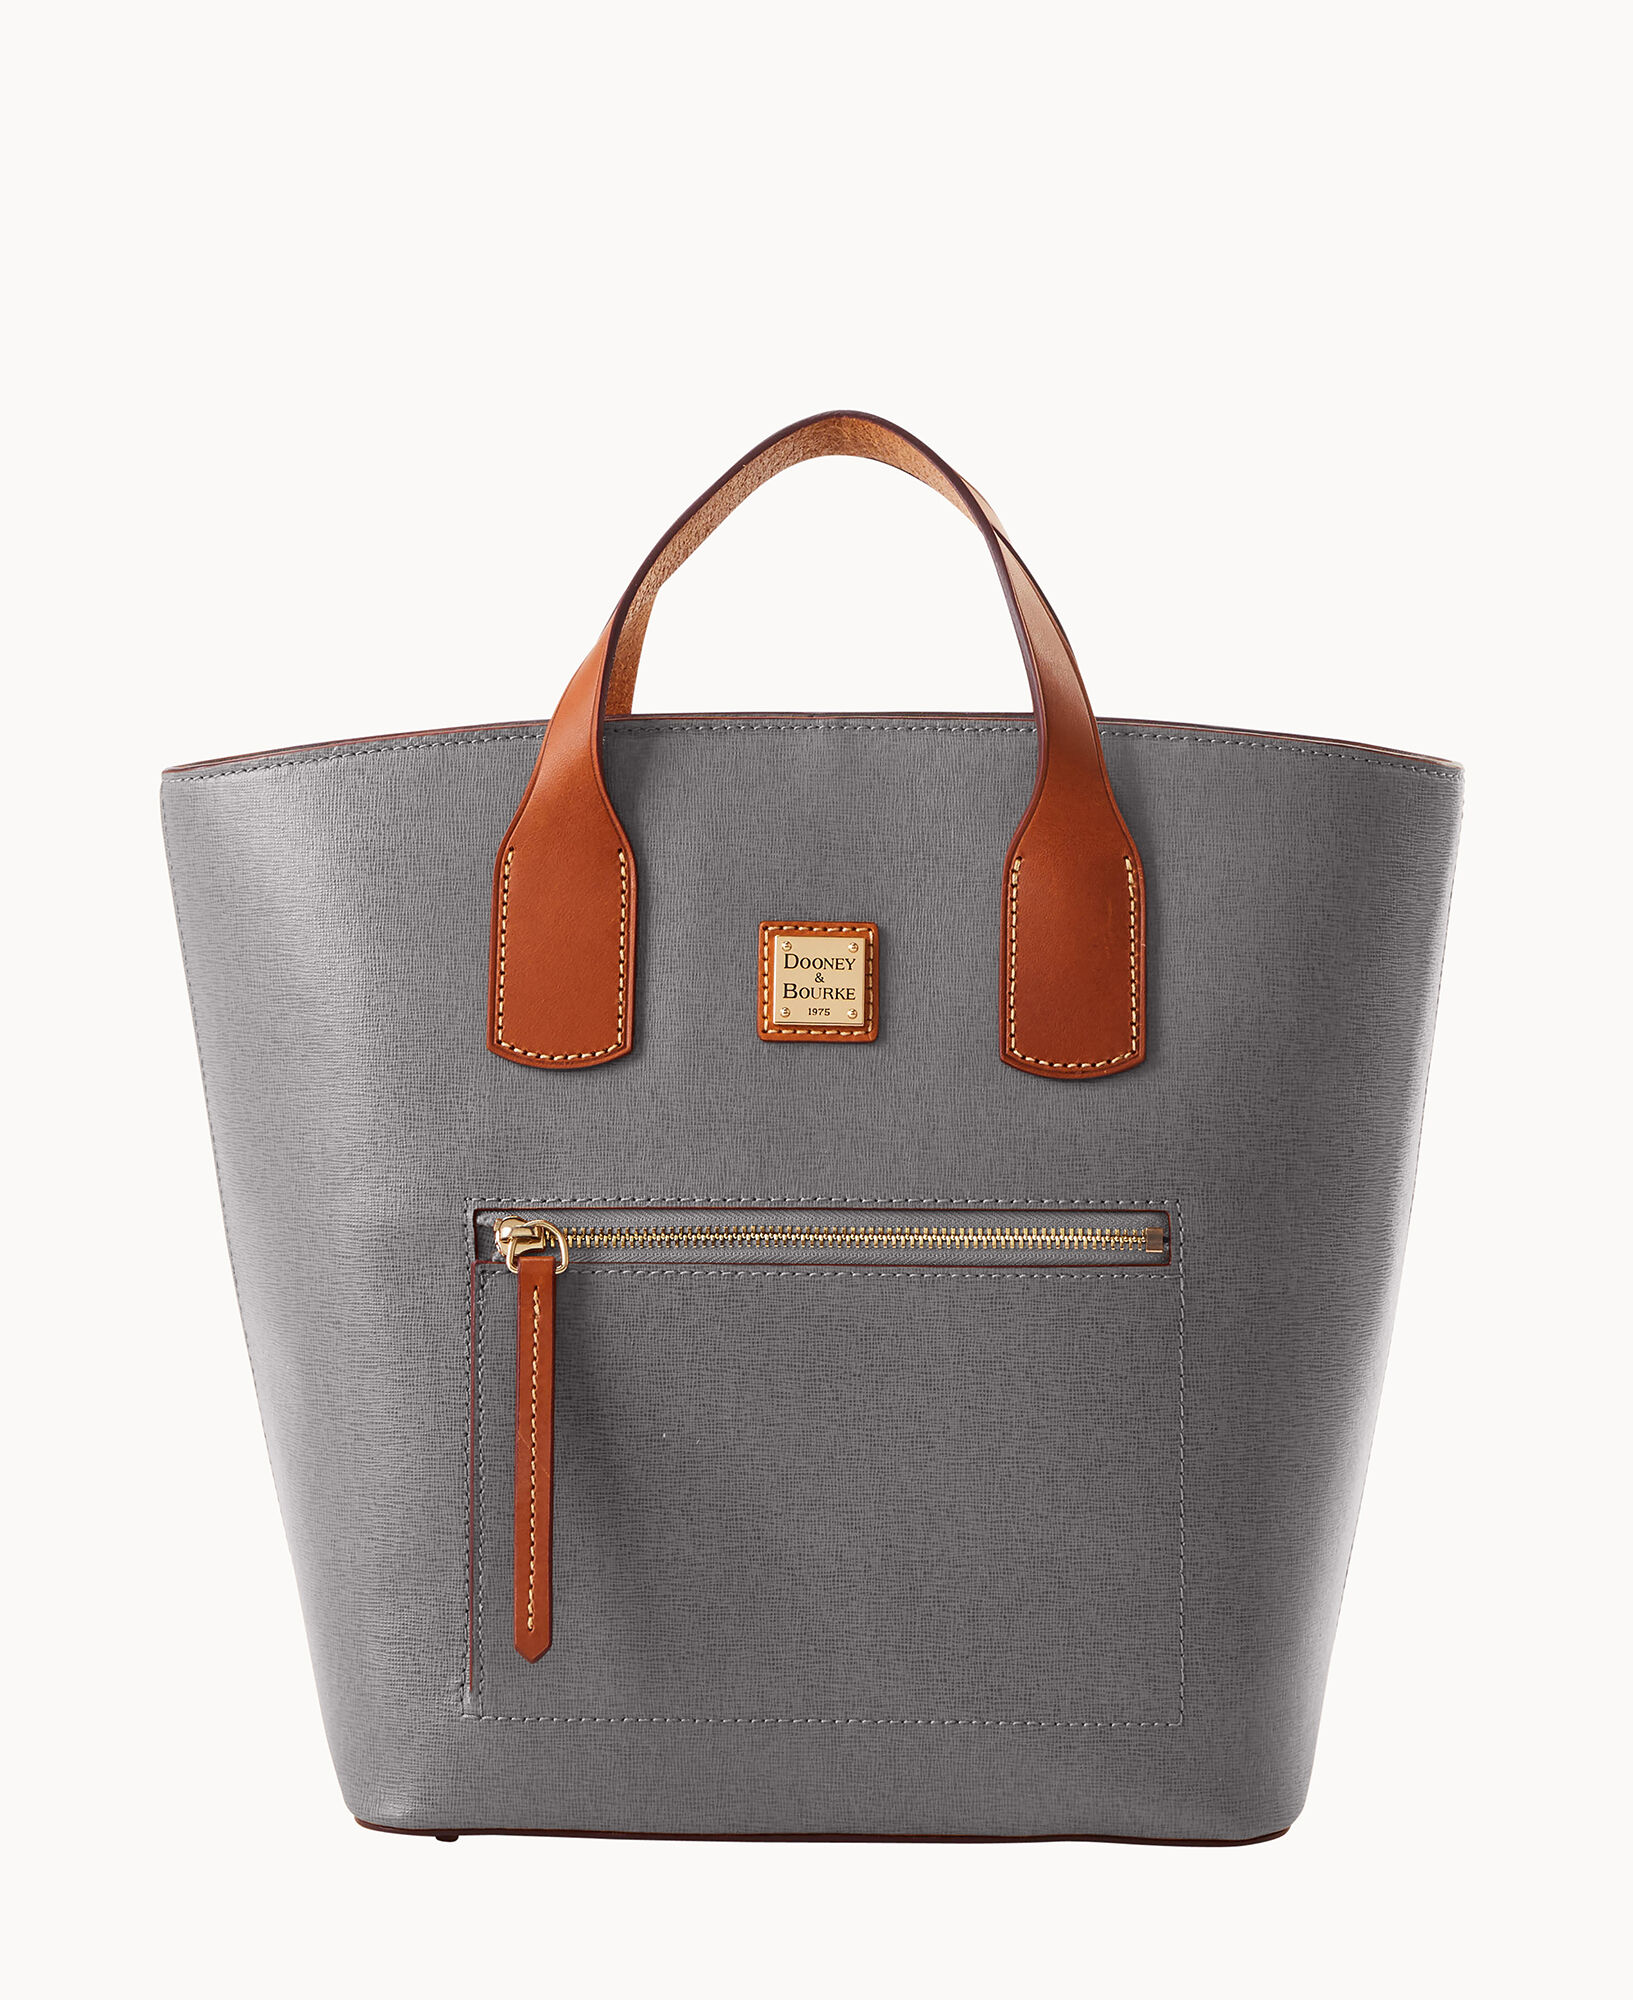 Dooney & Bourke Saffiano Darla Shopper - ShopStyle Tote Bags